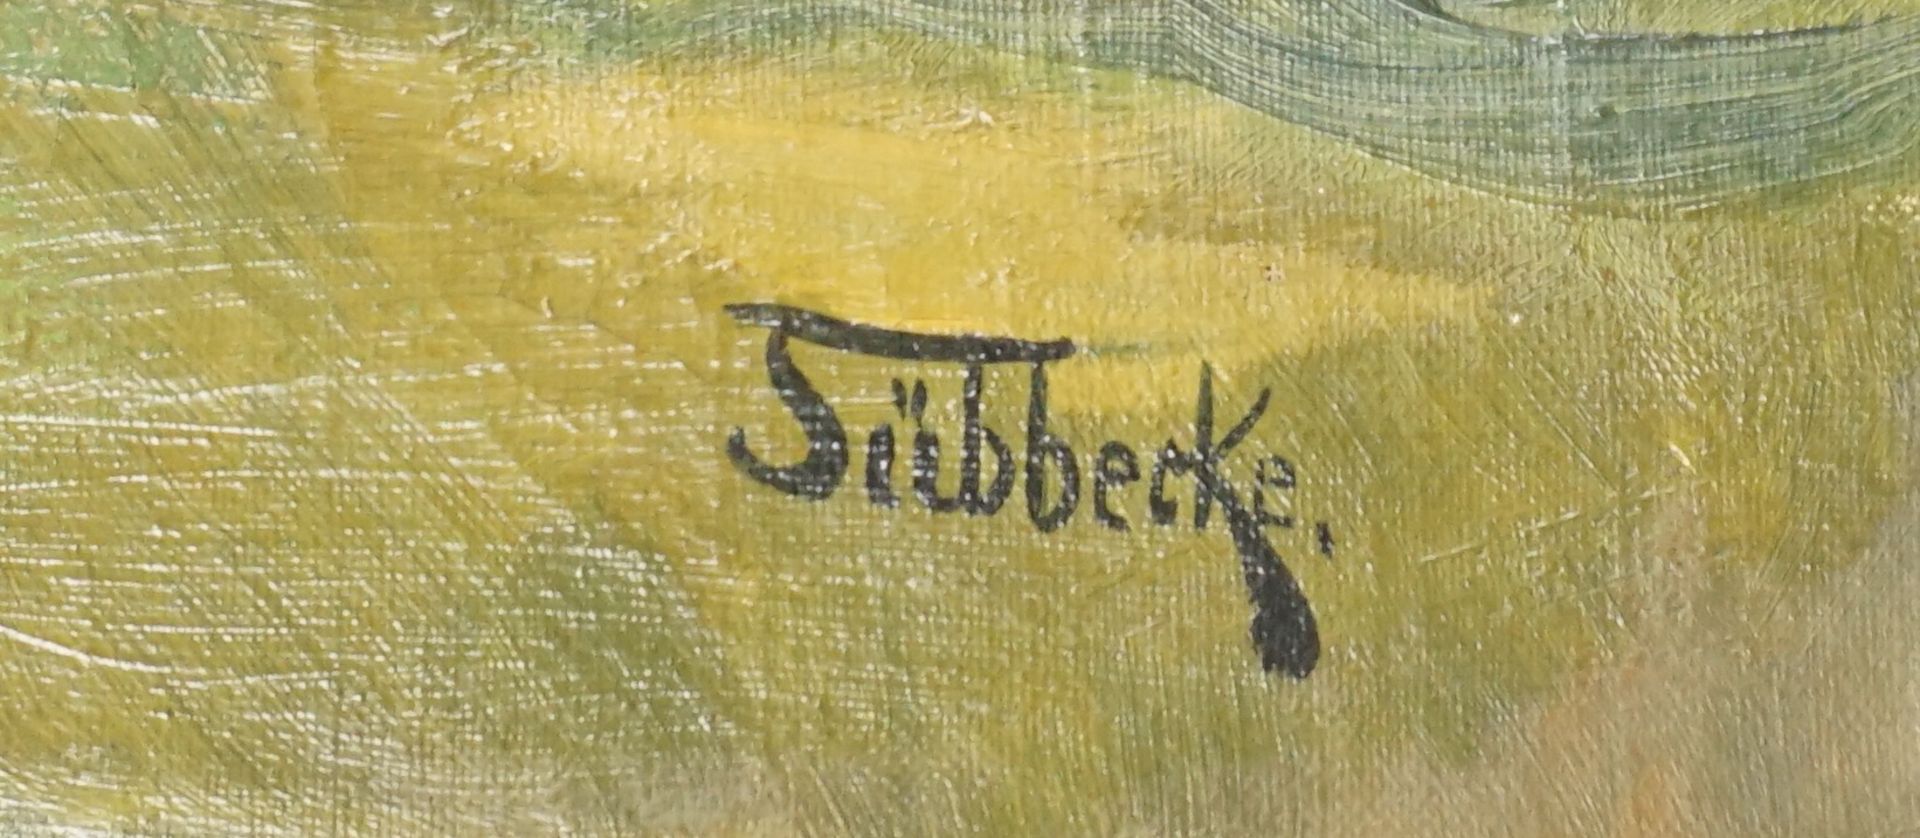 Pau Wilhelm Tübecke (*1848 Berlin - Weimar 1924) attr., "Märkische Seenlandschaft" - Image 3 of 3